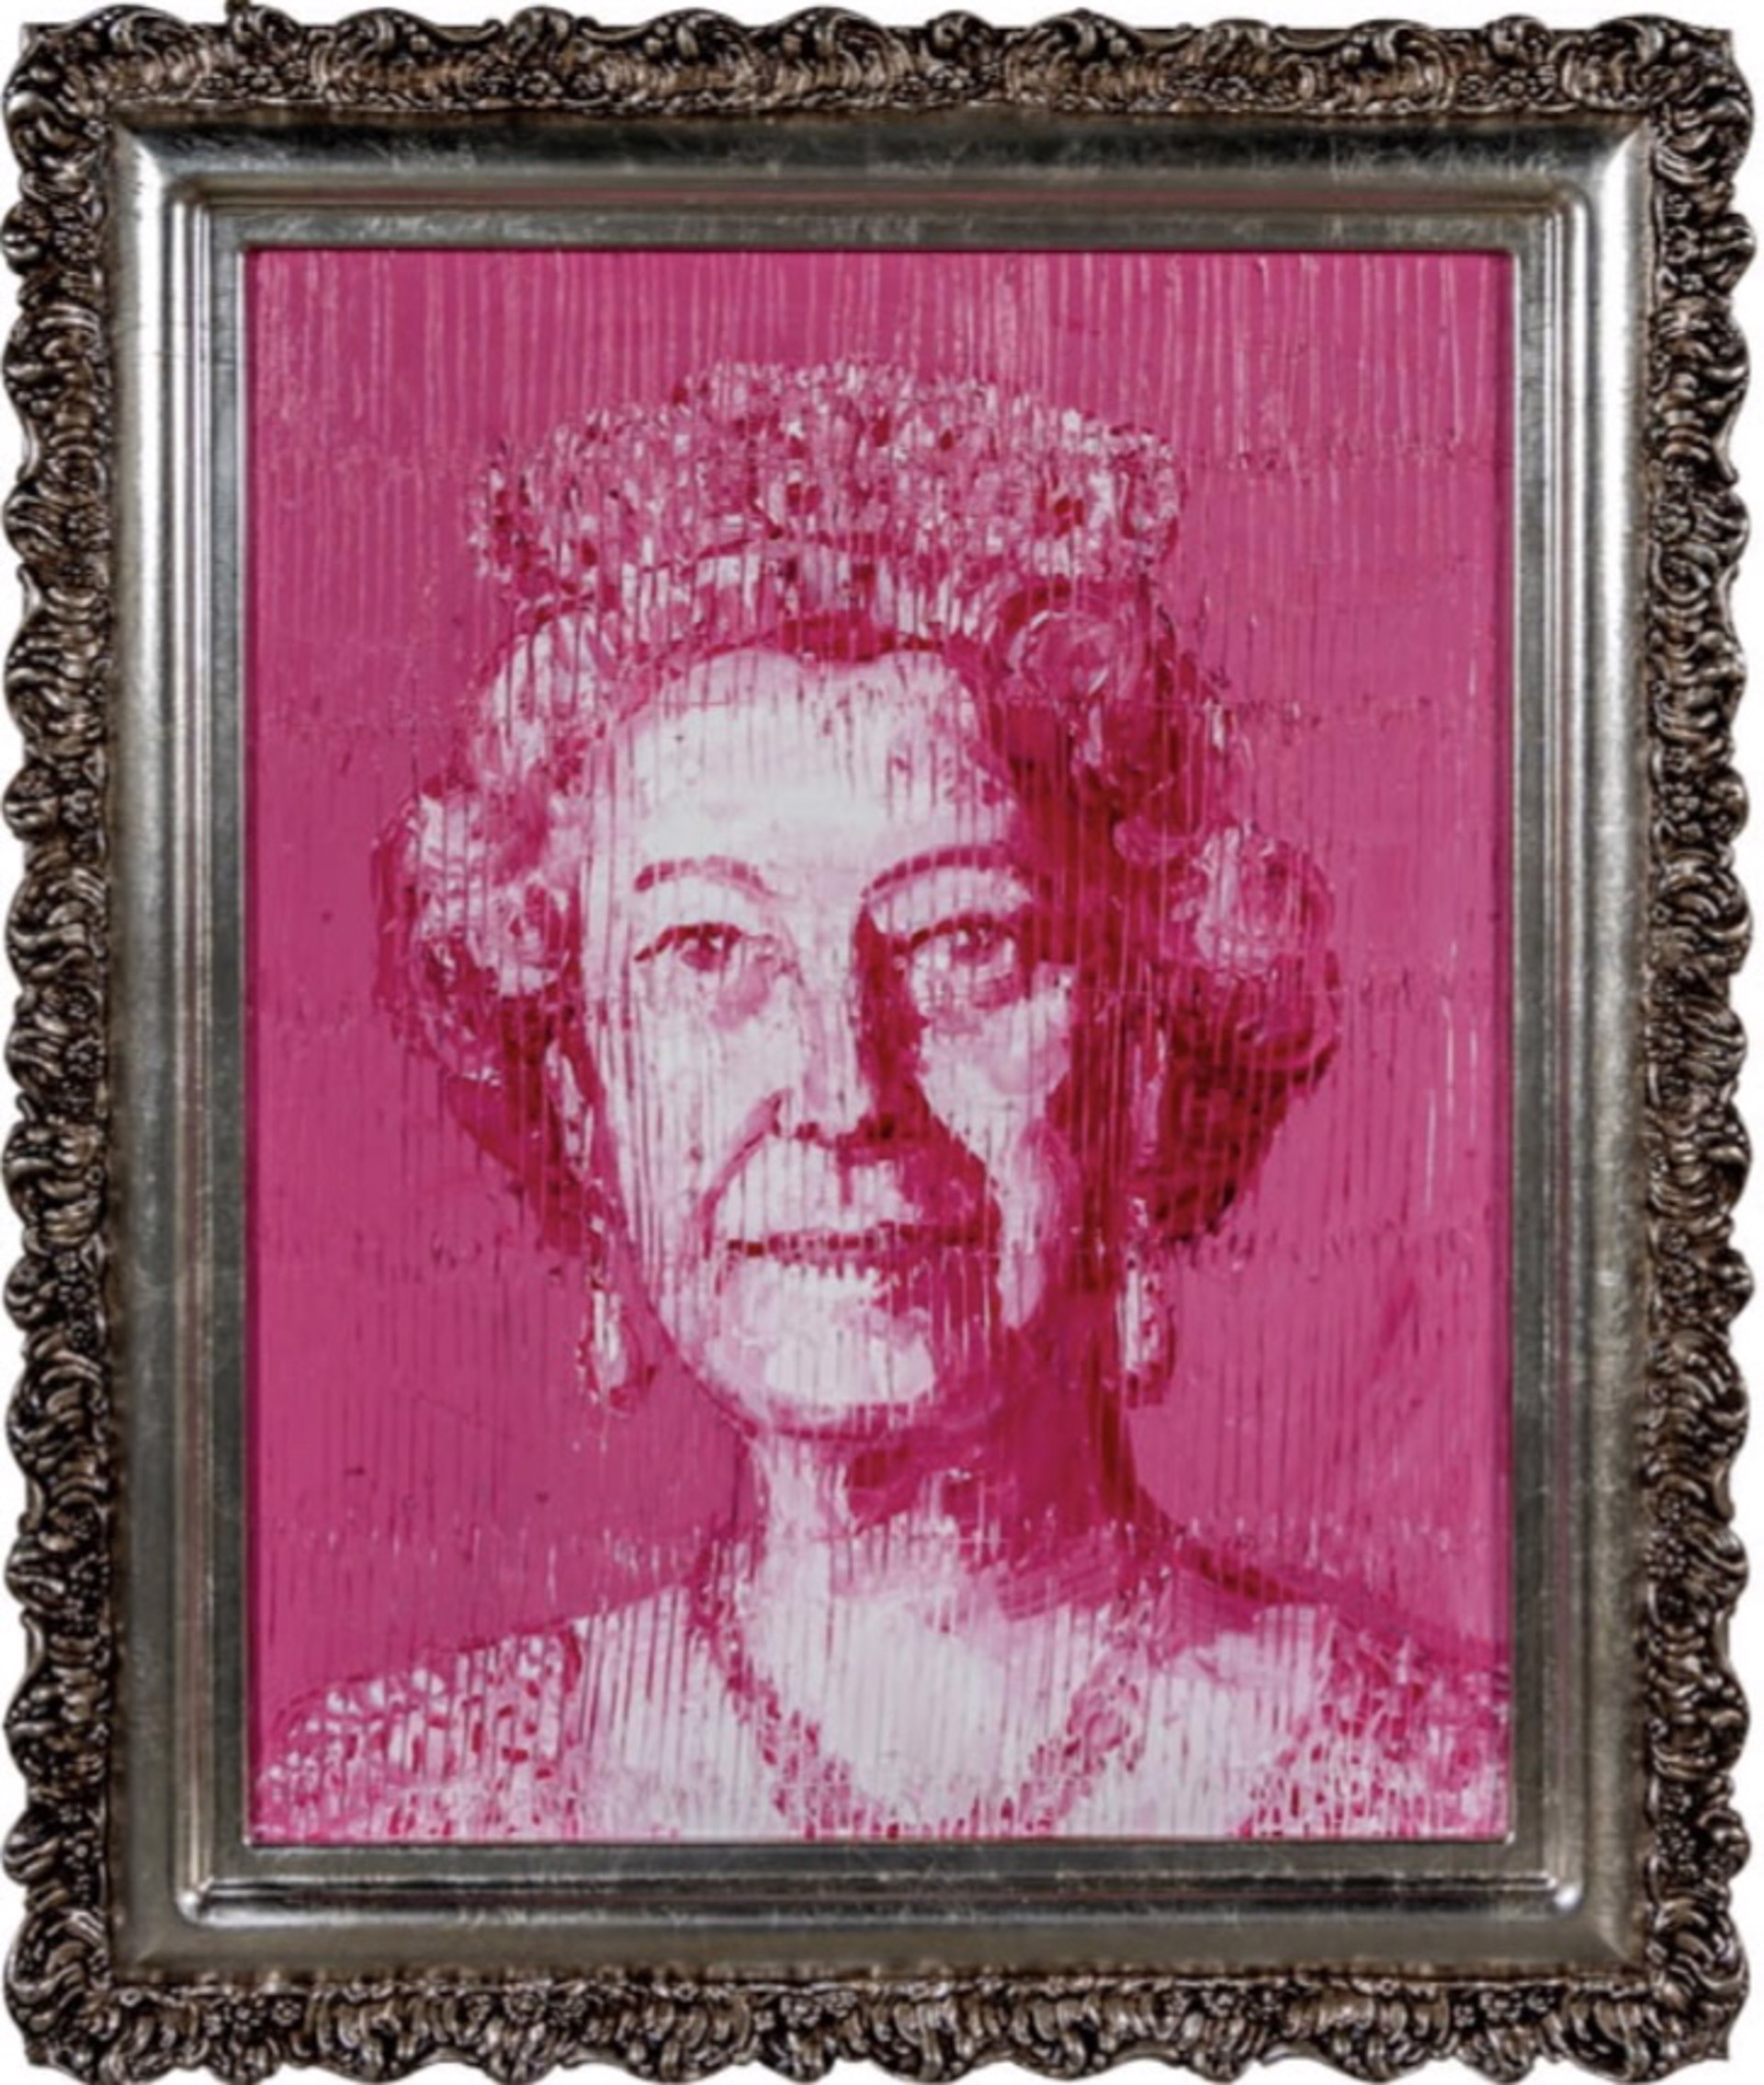 Her Majesty by Hunt Slonem